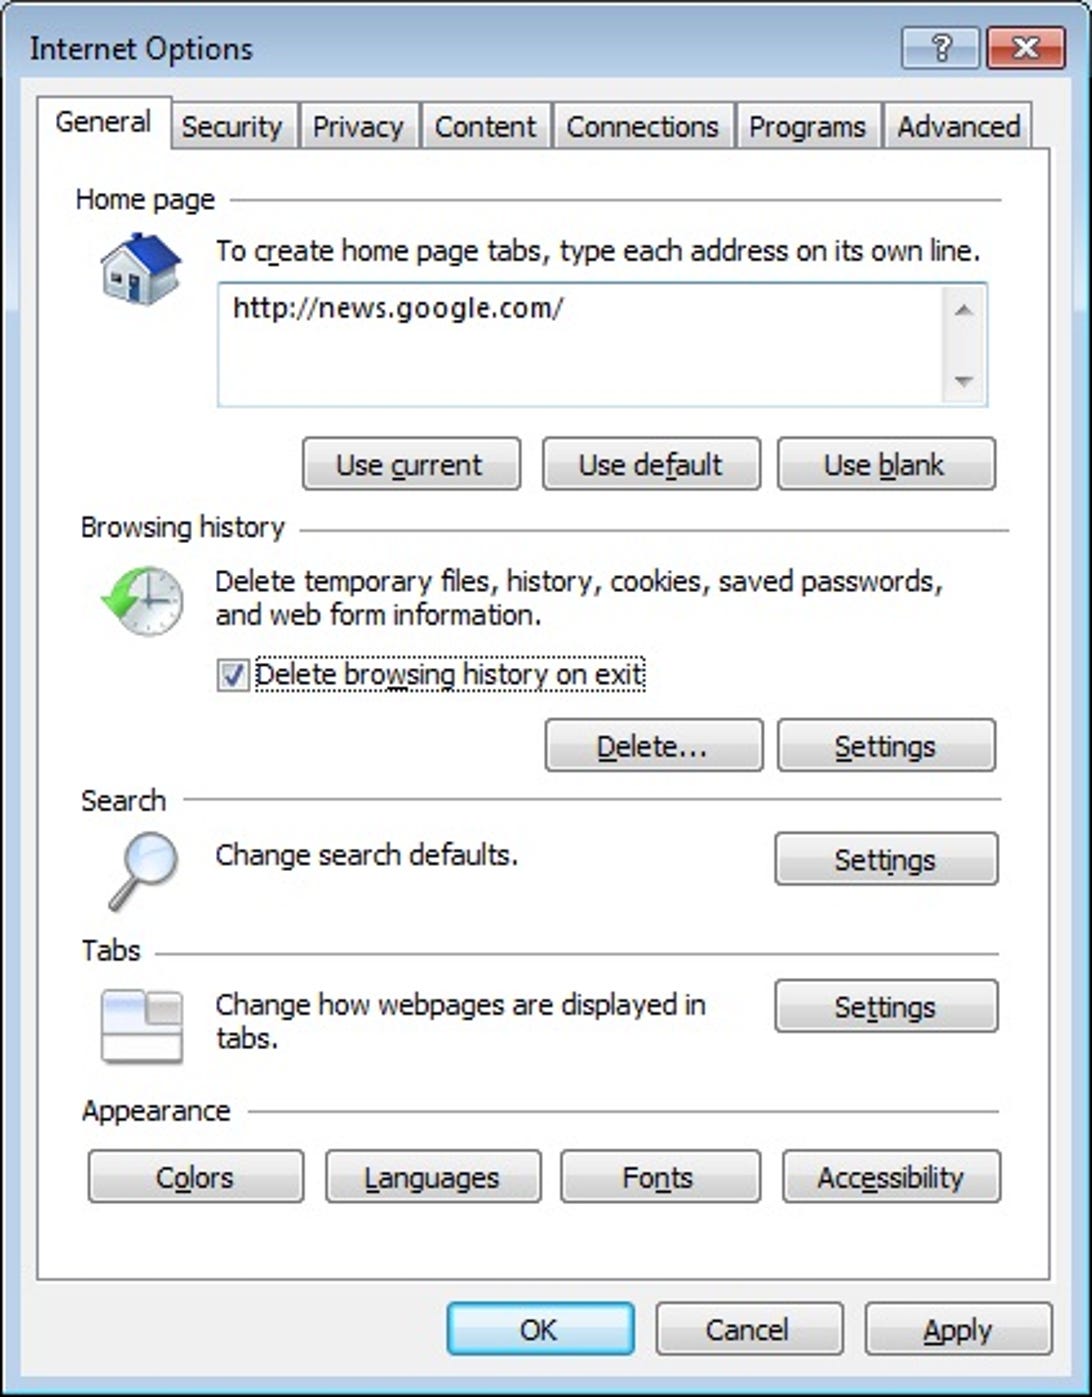 Internet Explorer 9's Options dialog